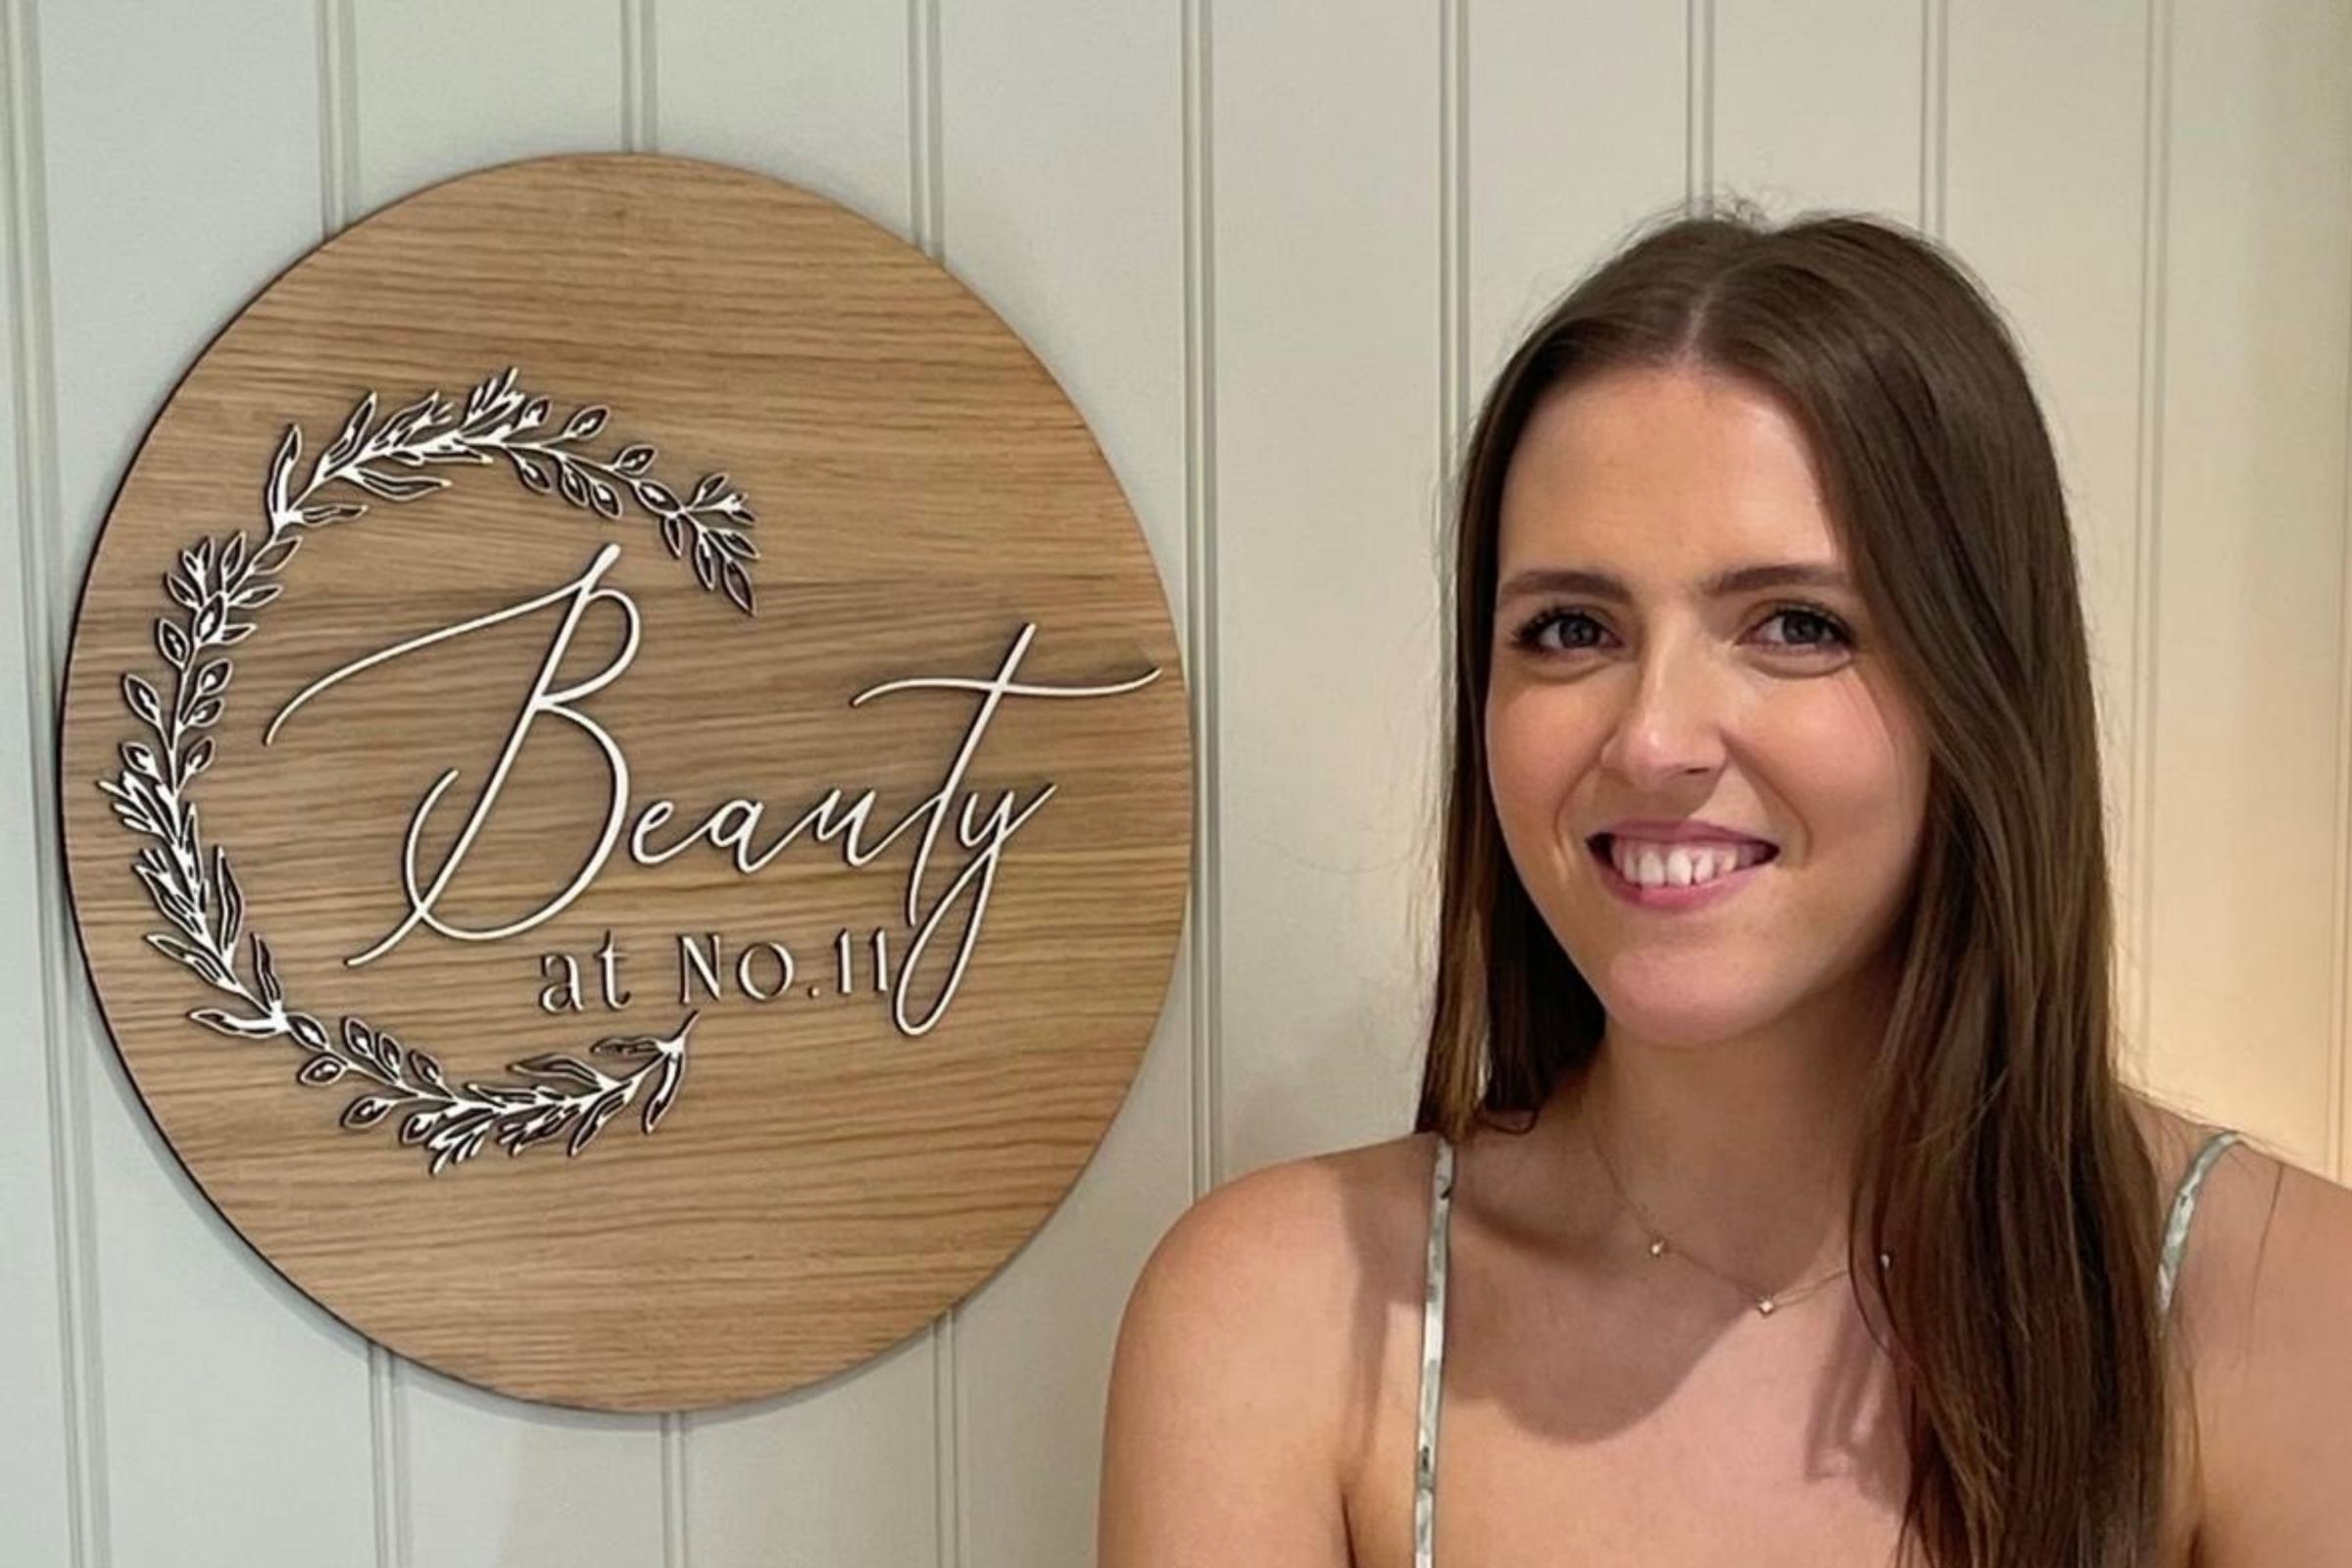 New sustainability-focused beauty studio opens in Watlington